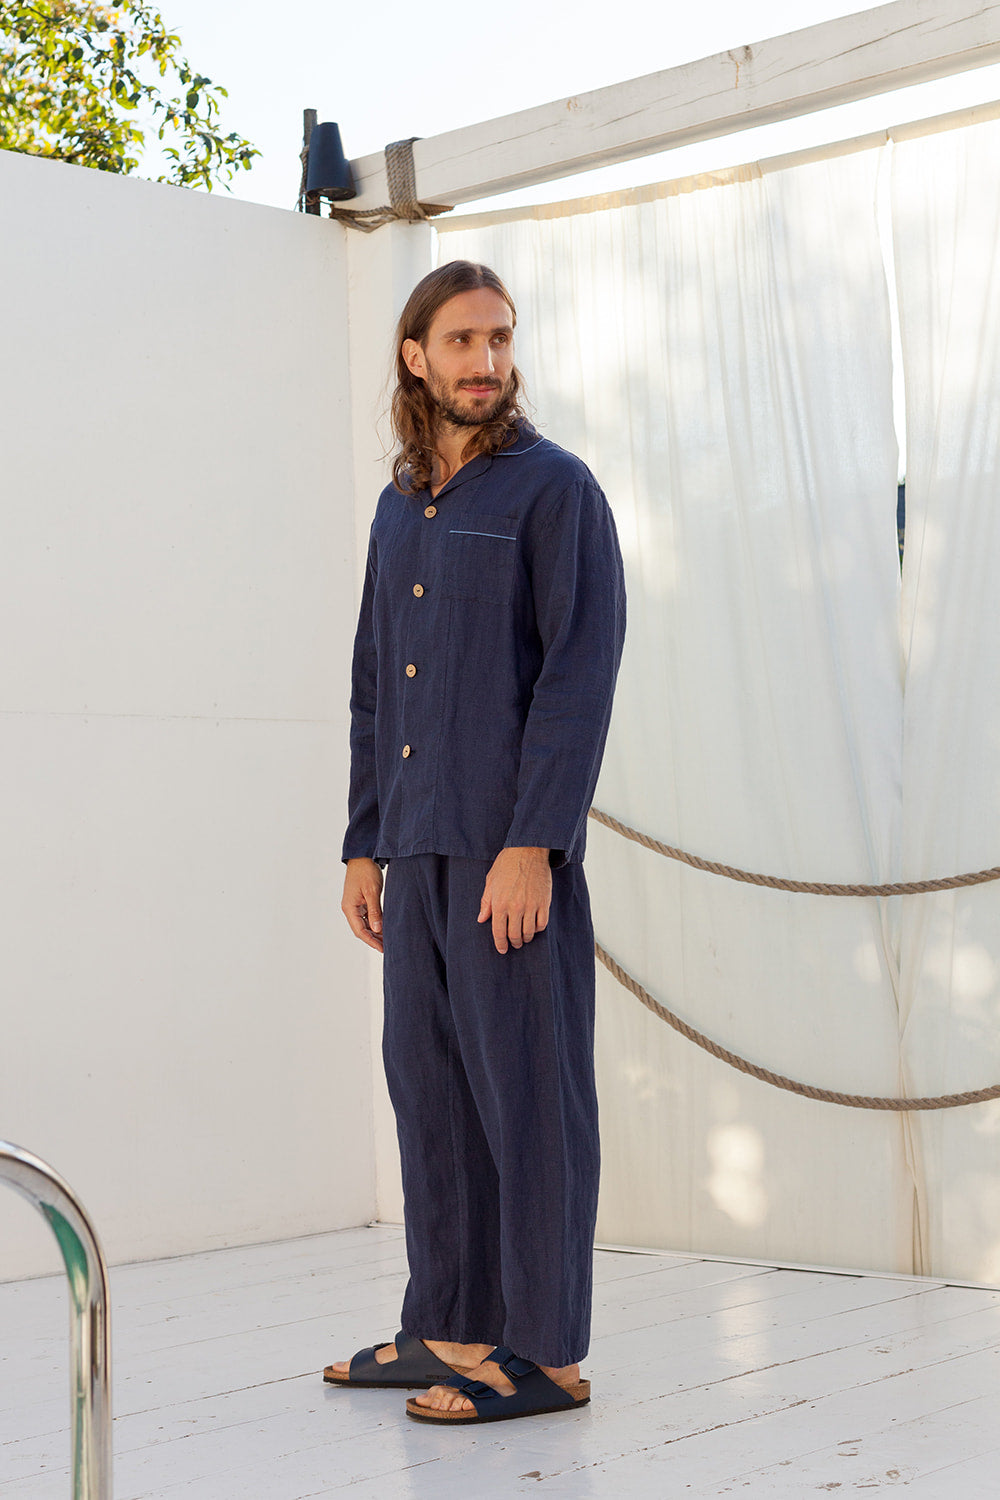 PAPAVER men's linen pajama set